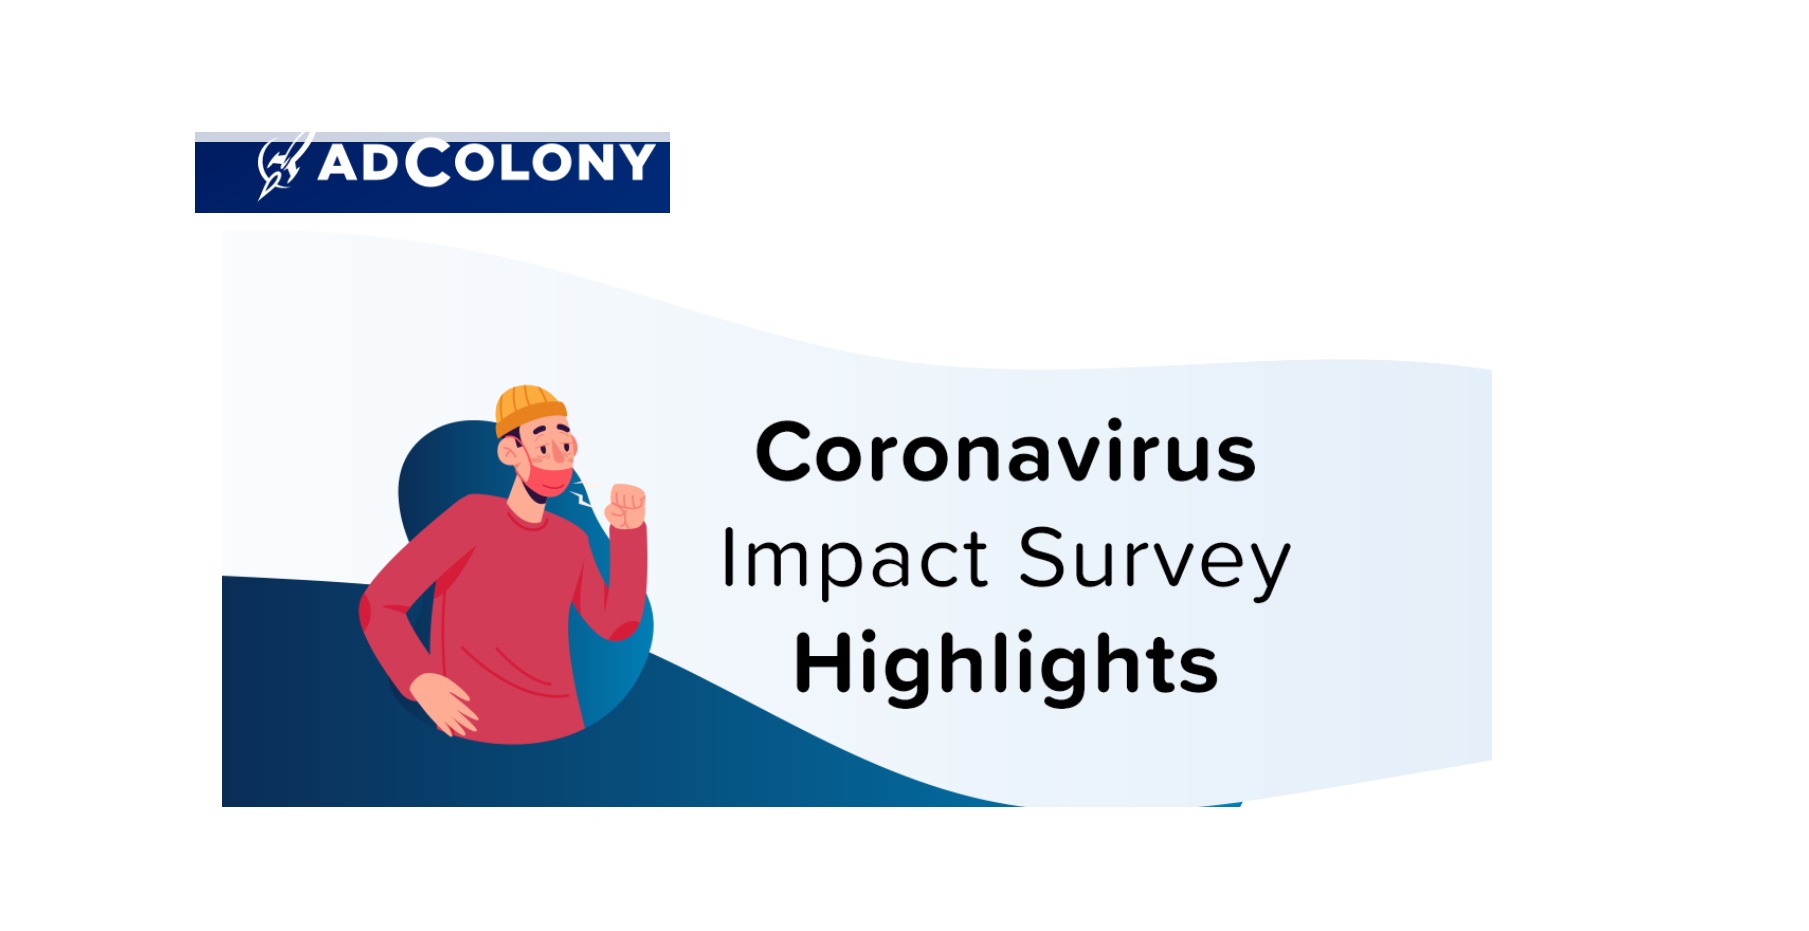 ad colony, coronavirus, programapublicidad